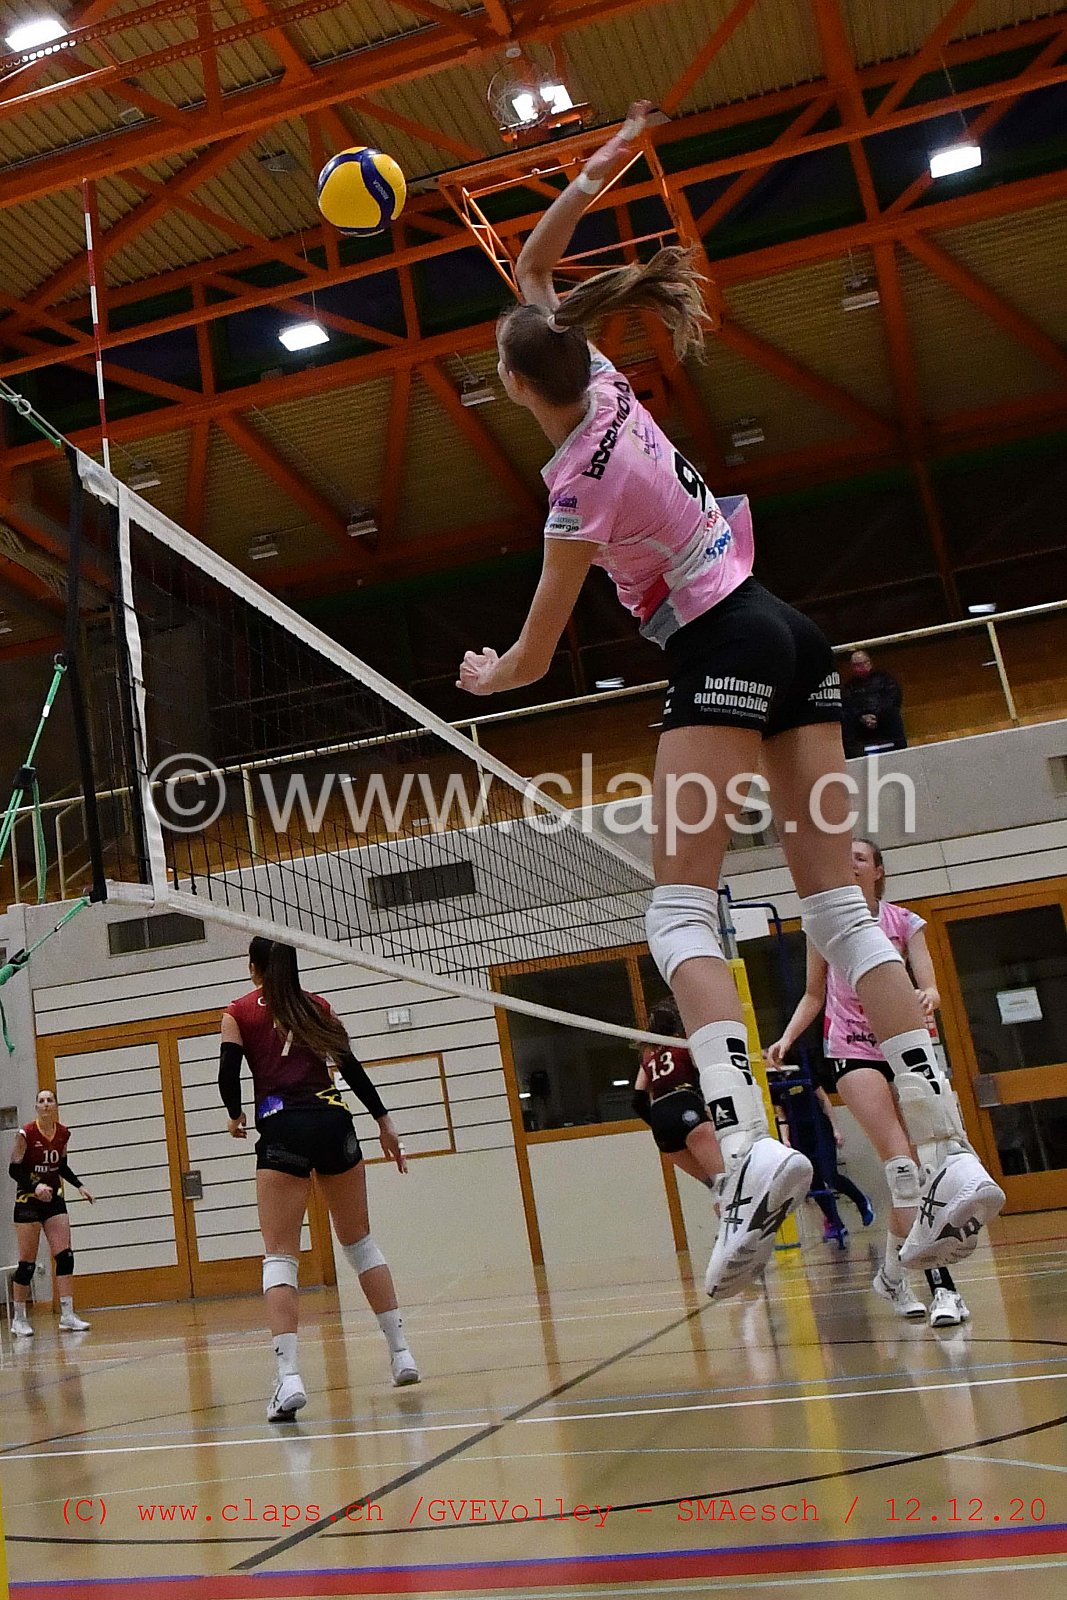 Genève Volley SMAesch